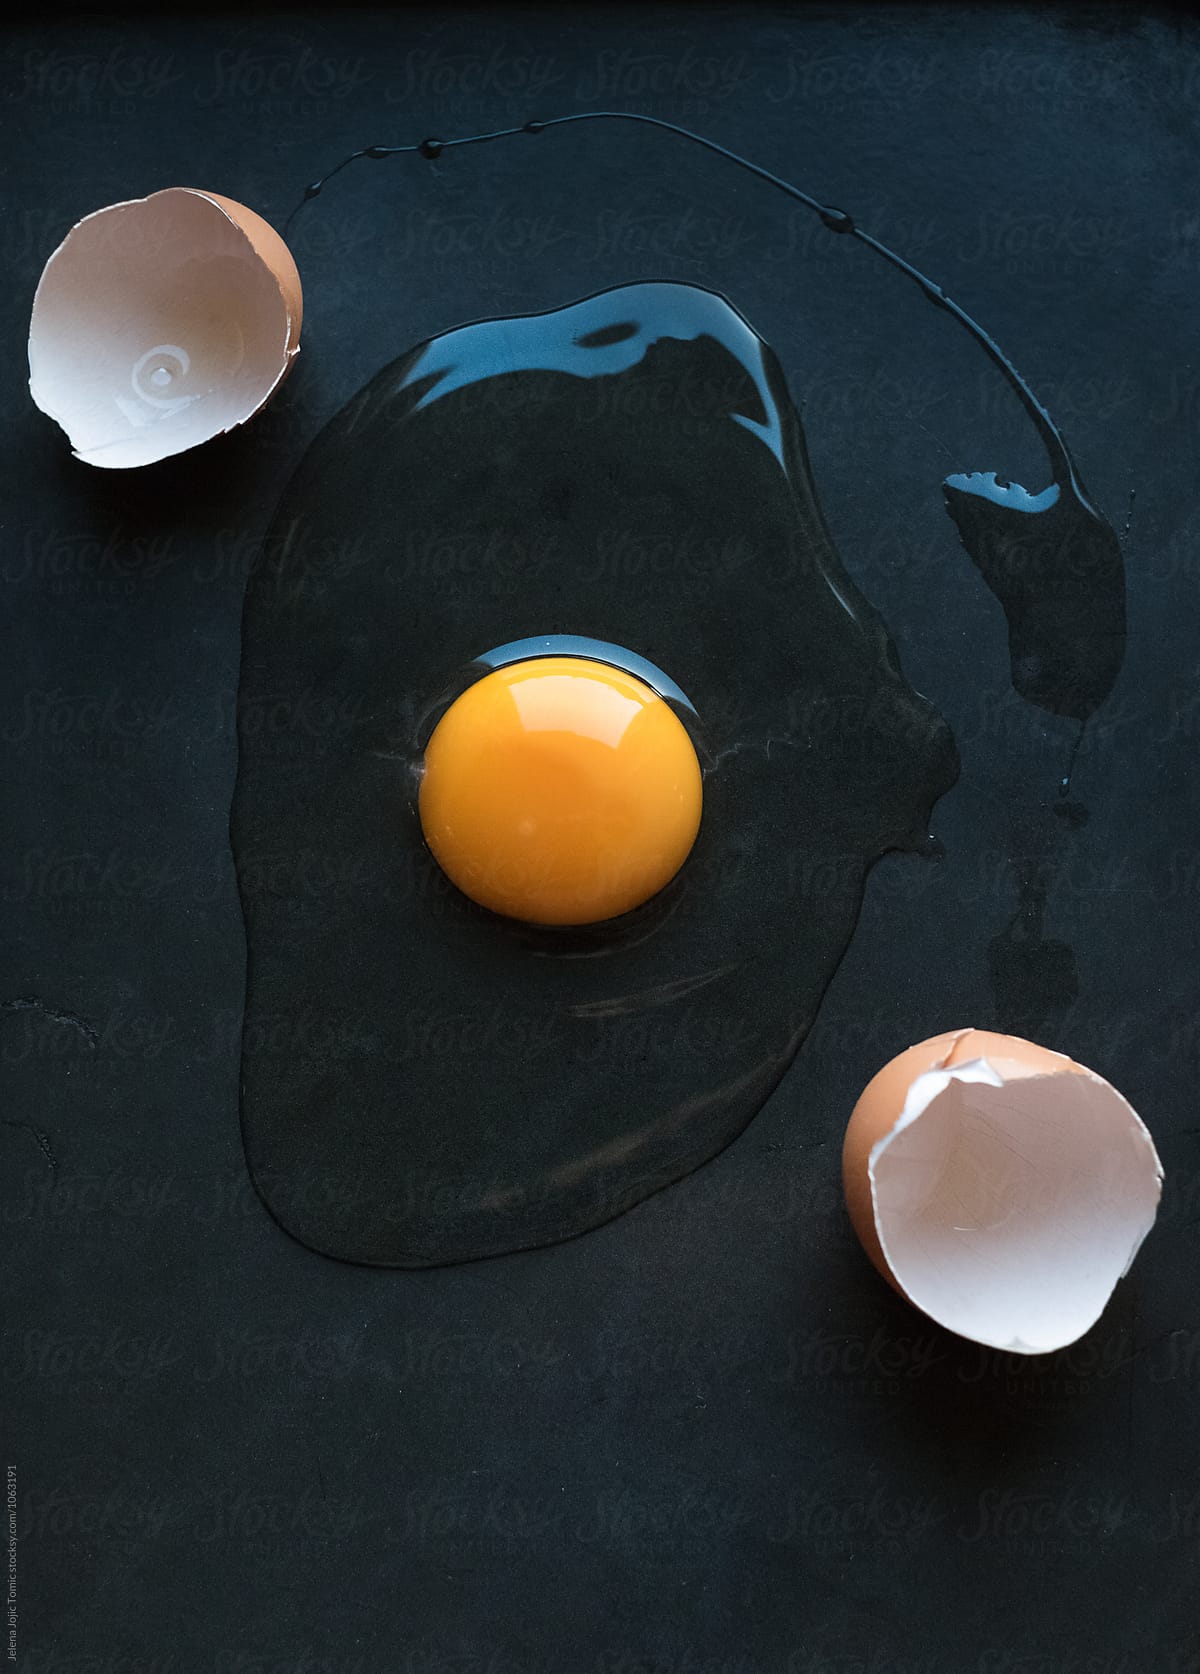 A Raw Egg Cracked By Stocksy Contributor Jelena Jojic Tomic Stocksy